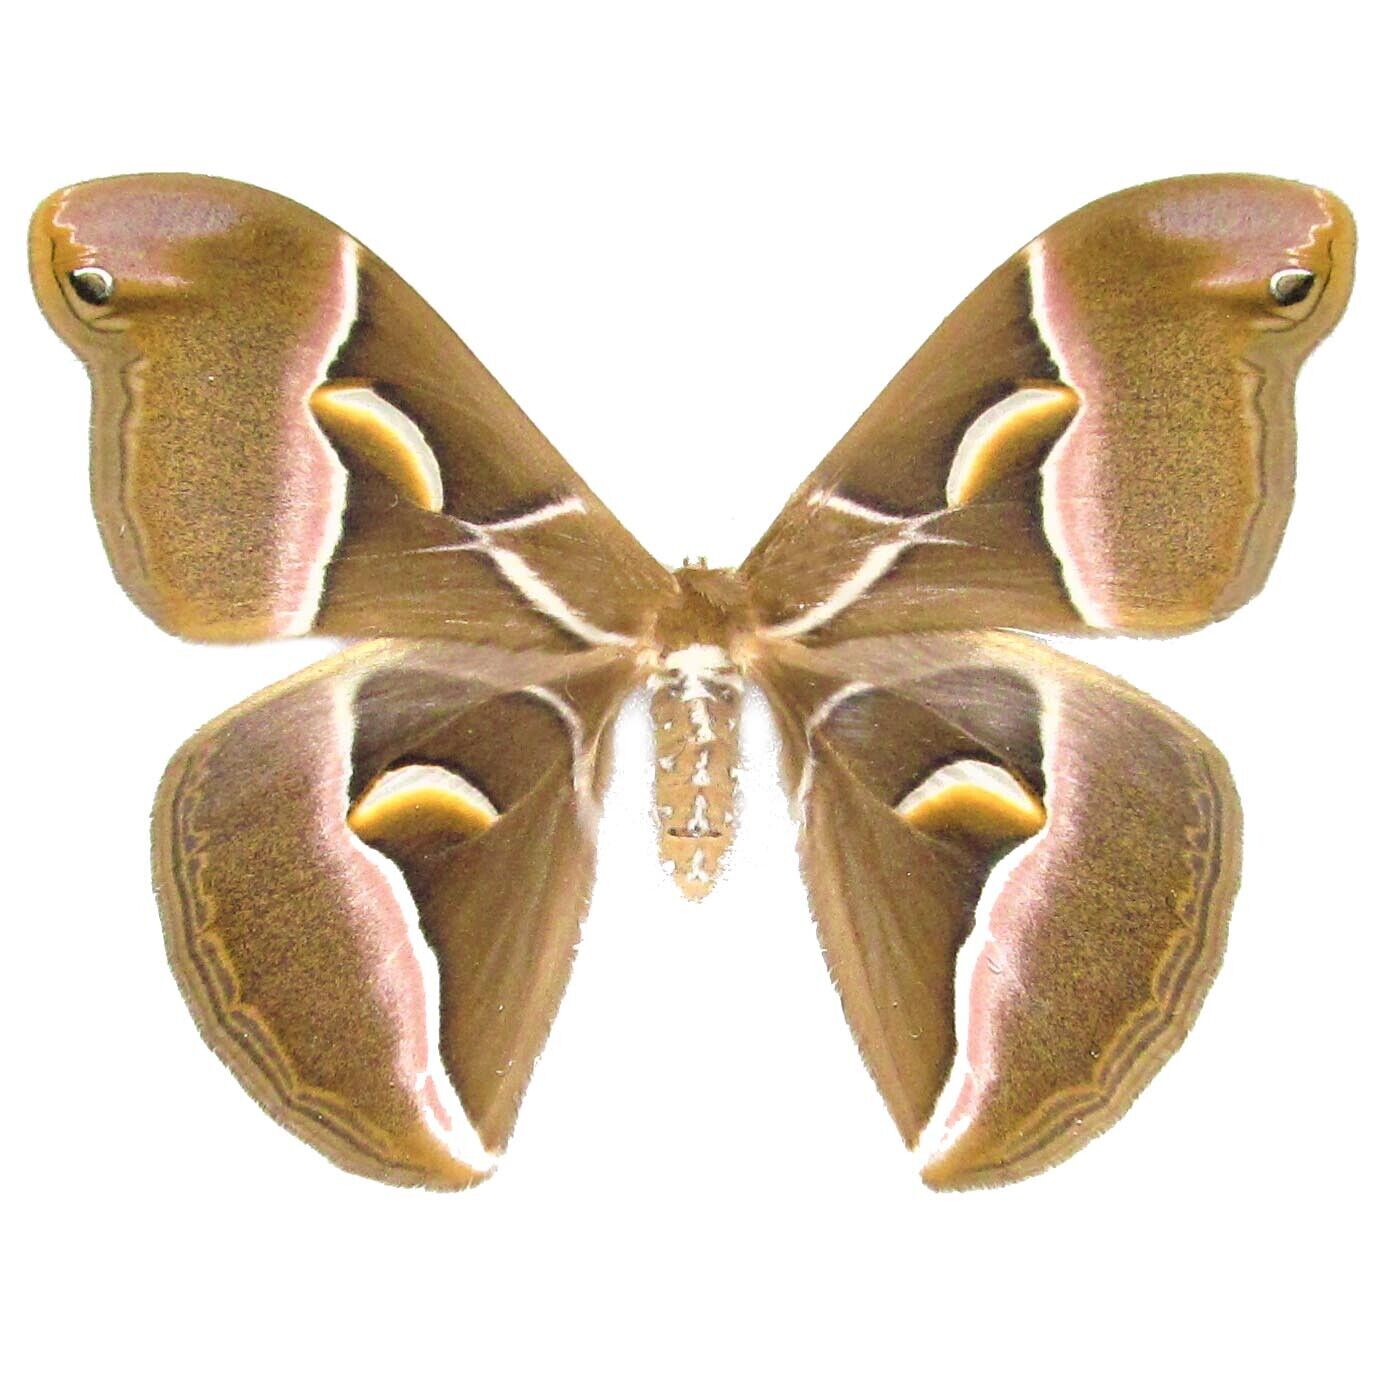 Samia cynthia saturn moth China unmounted wings closed wings closed